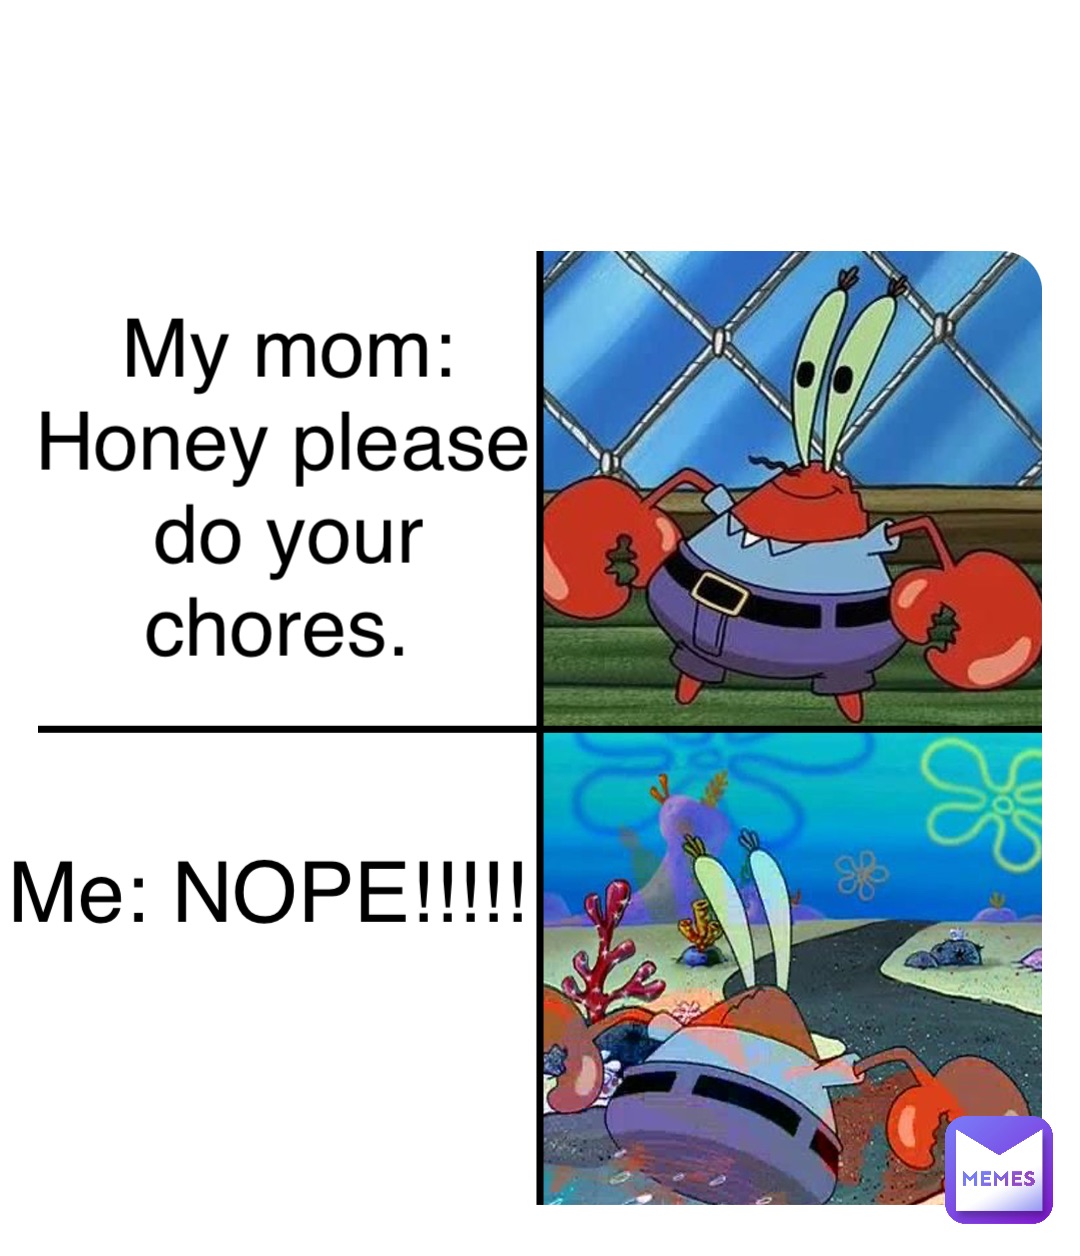 My mom: Honey please do your chores. Me: NOPE!!!!!